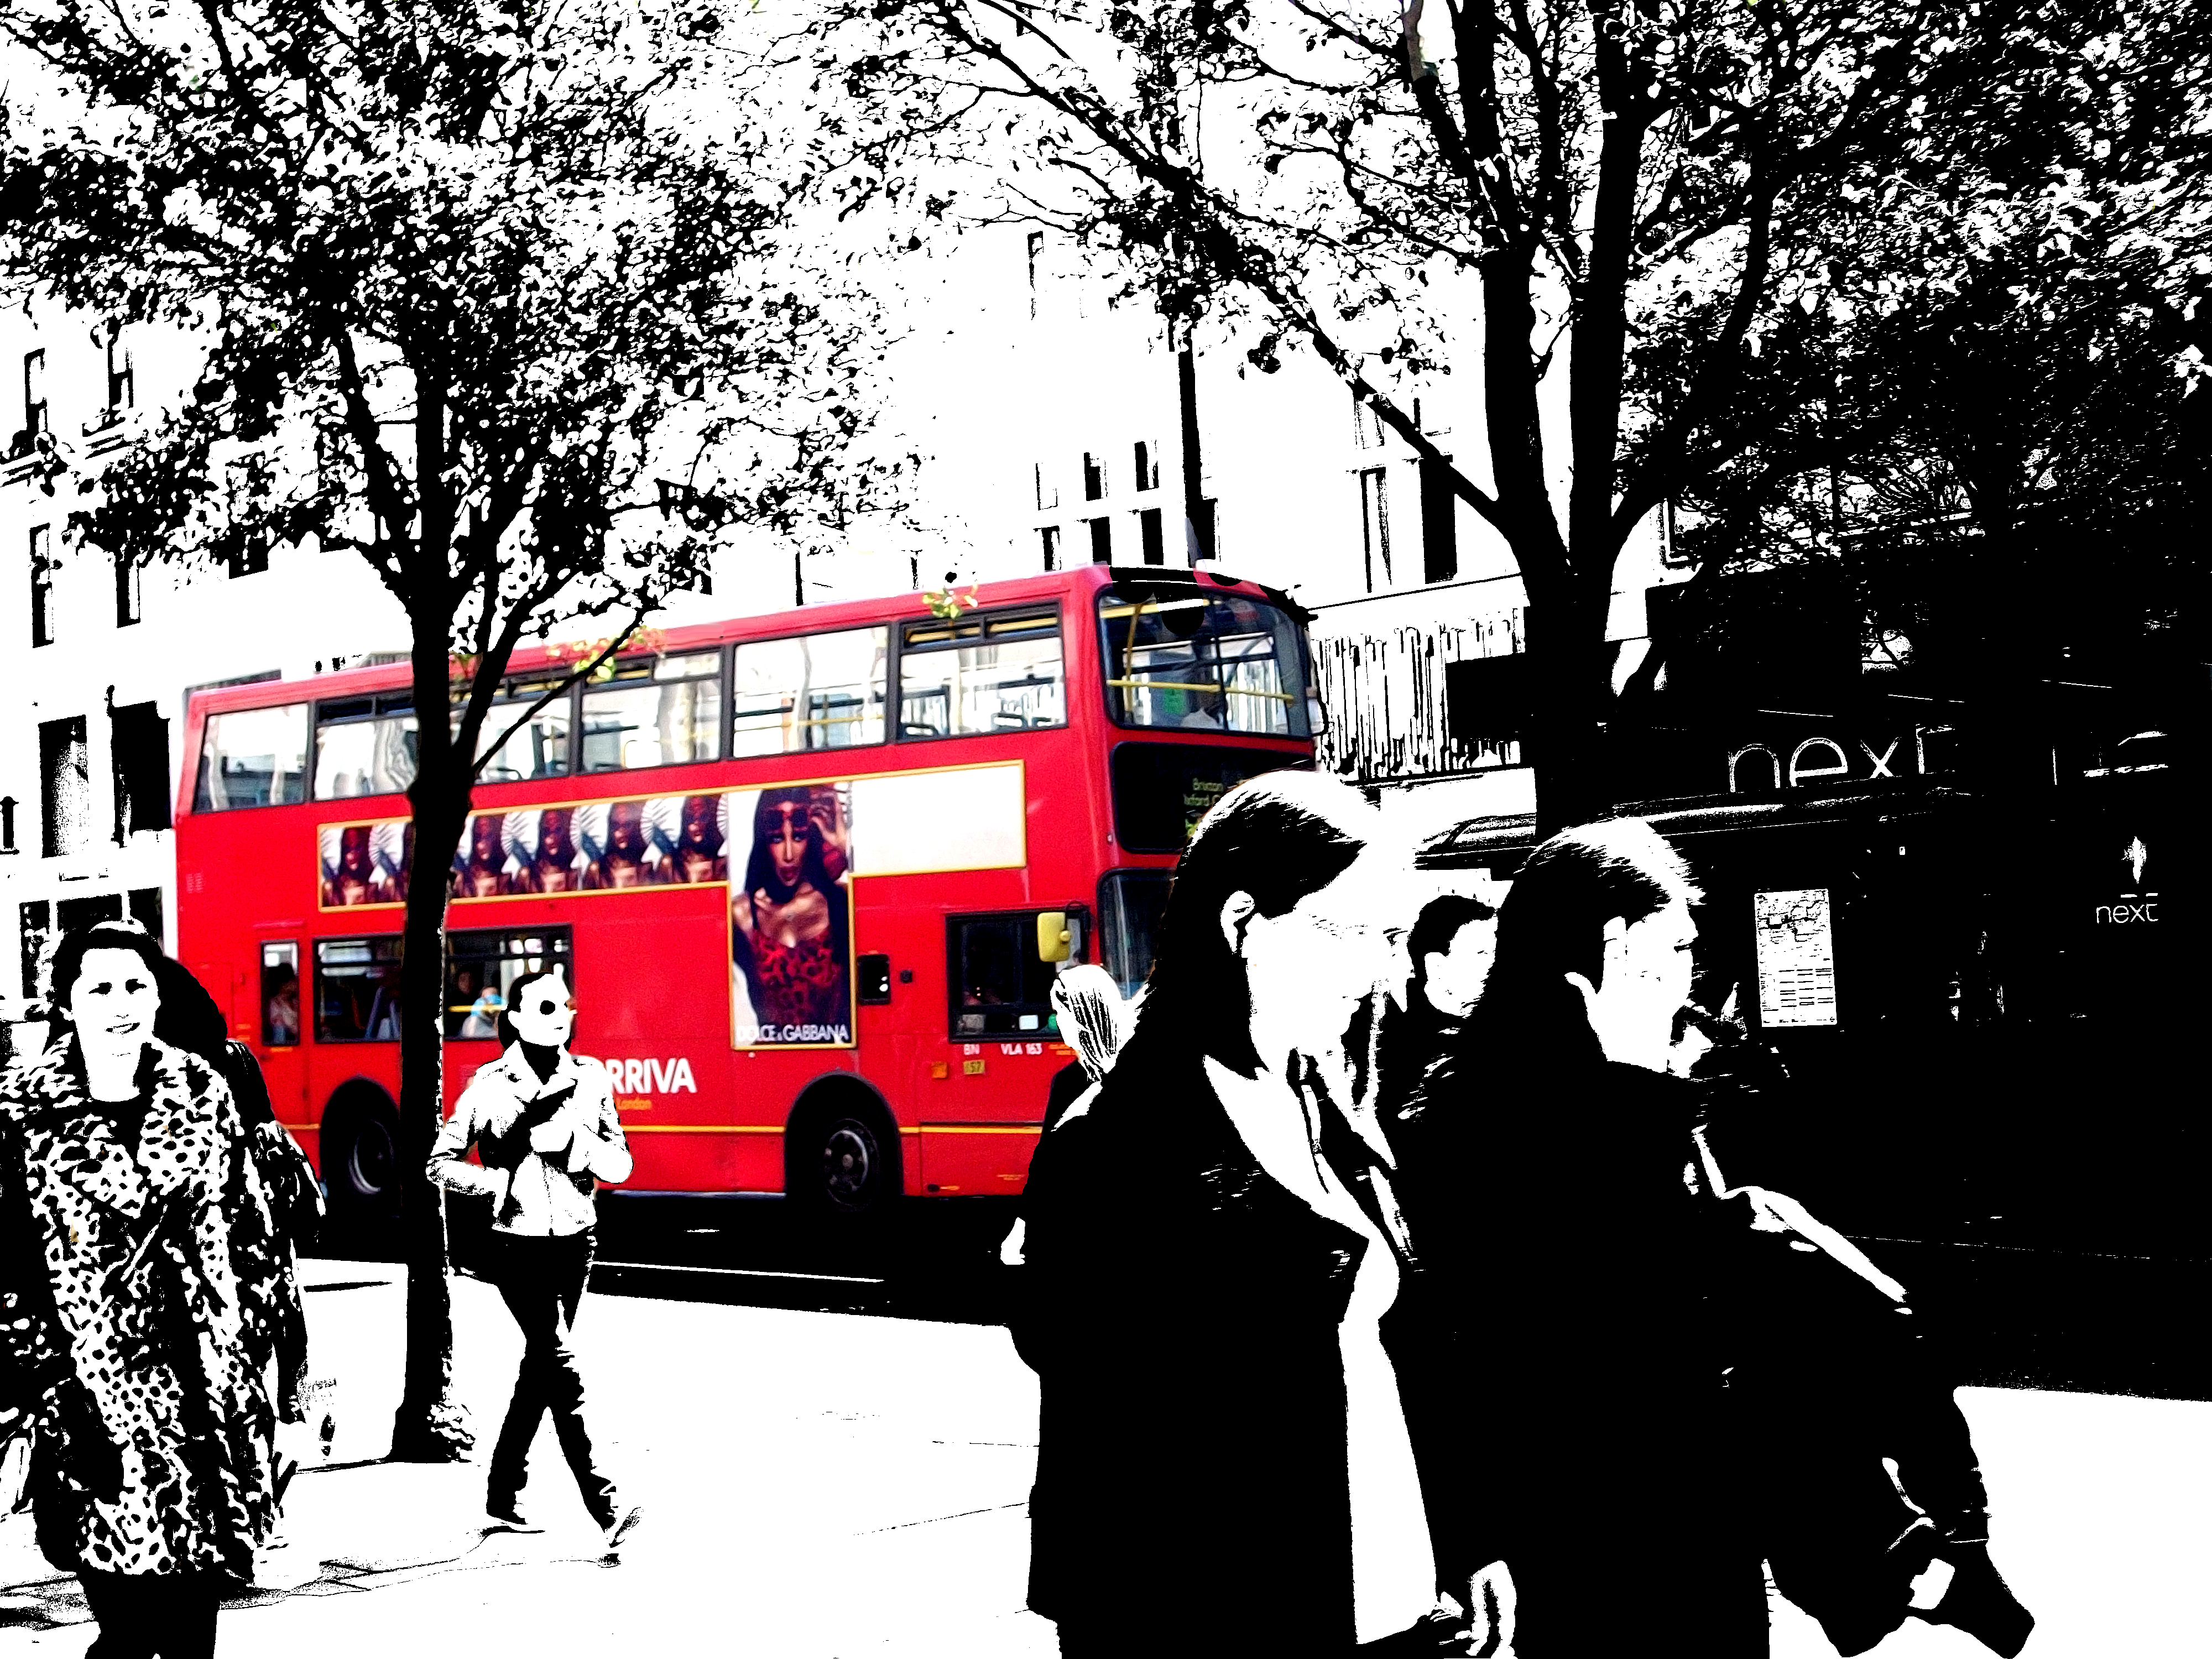 london_bus_by_miyakoxp-d3fp0jp